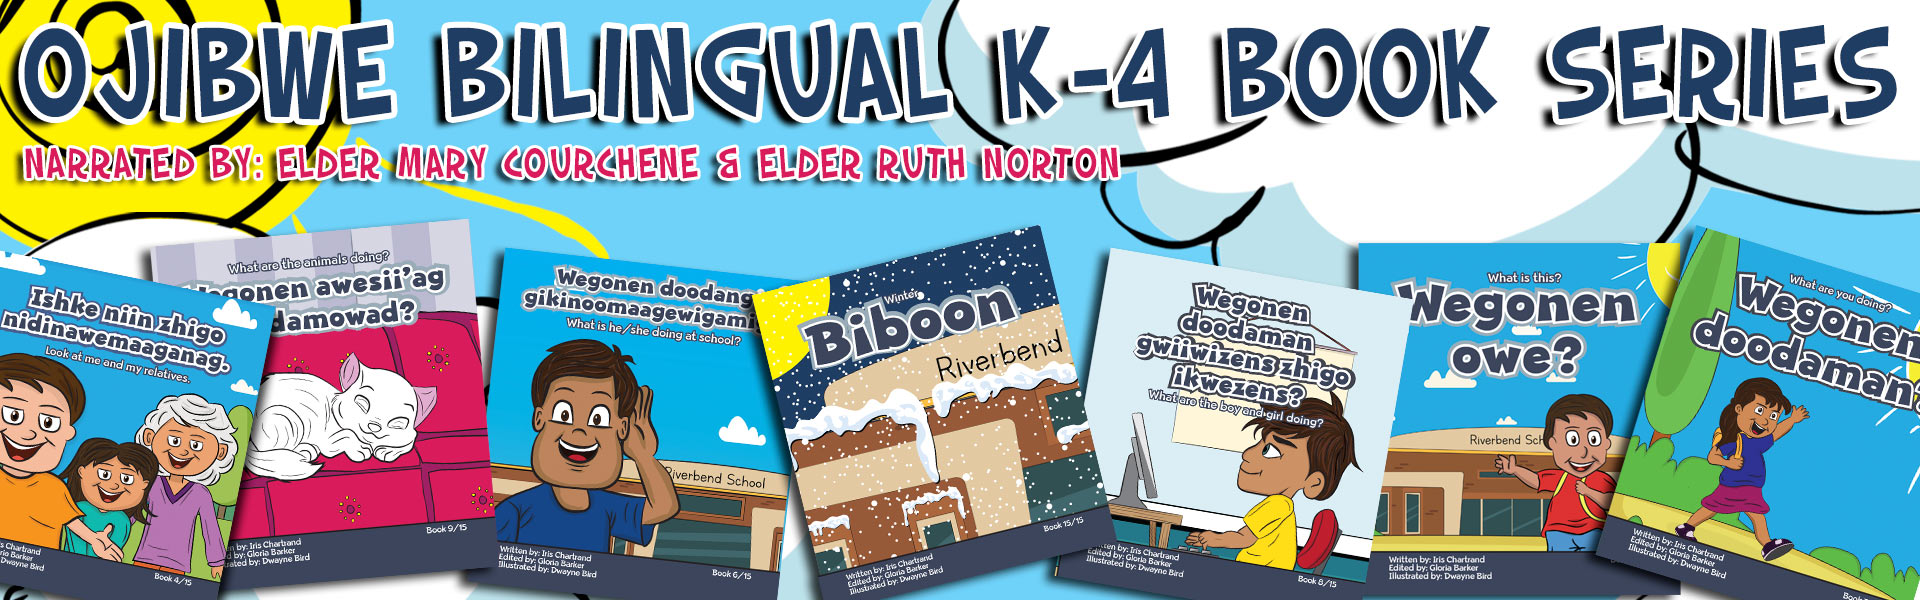 Ojibwe Bilingual K-4 Book Series